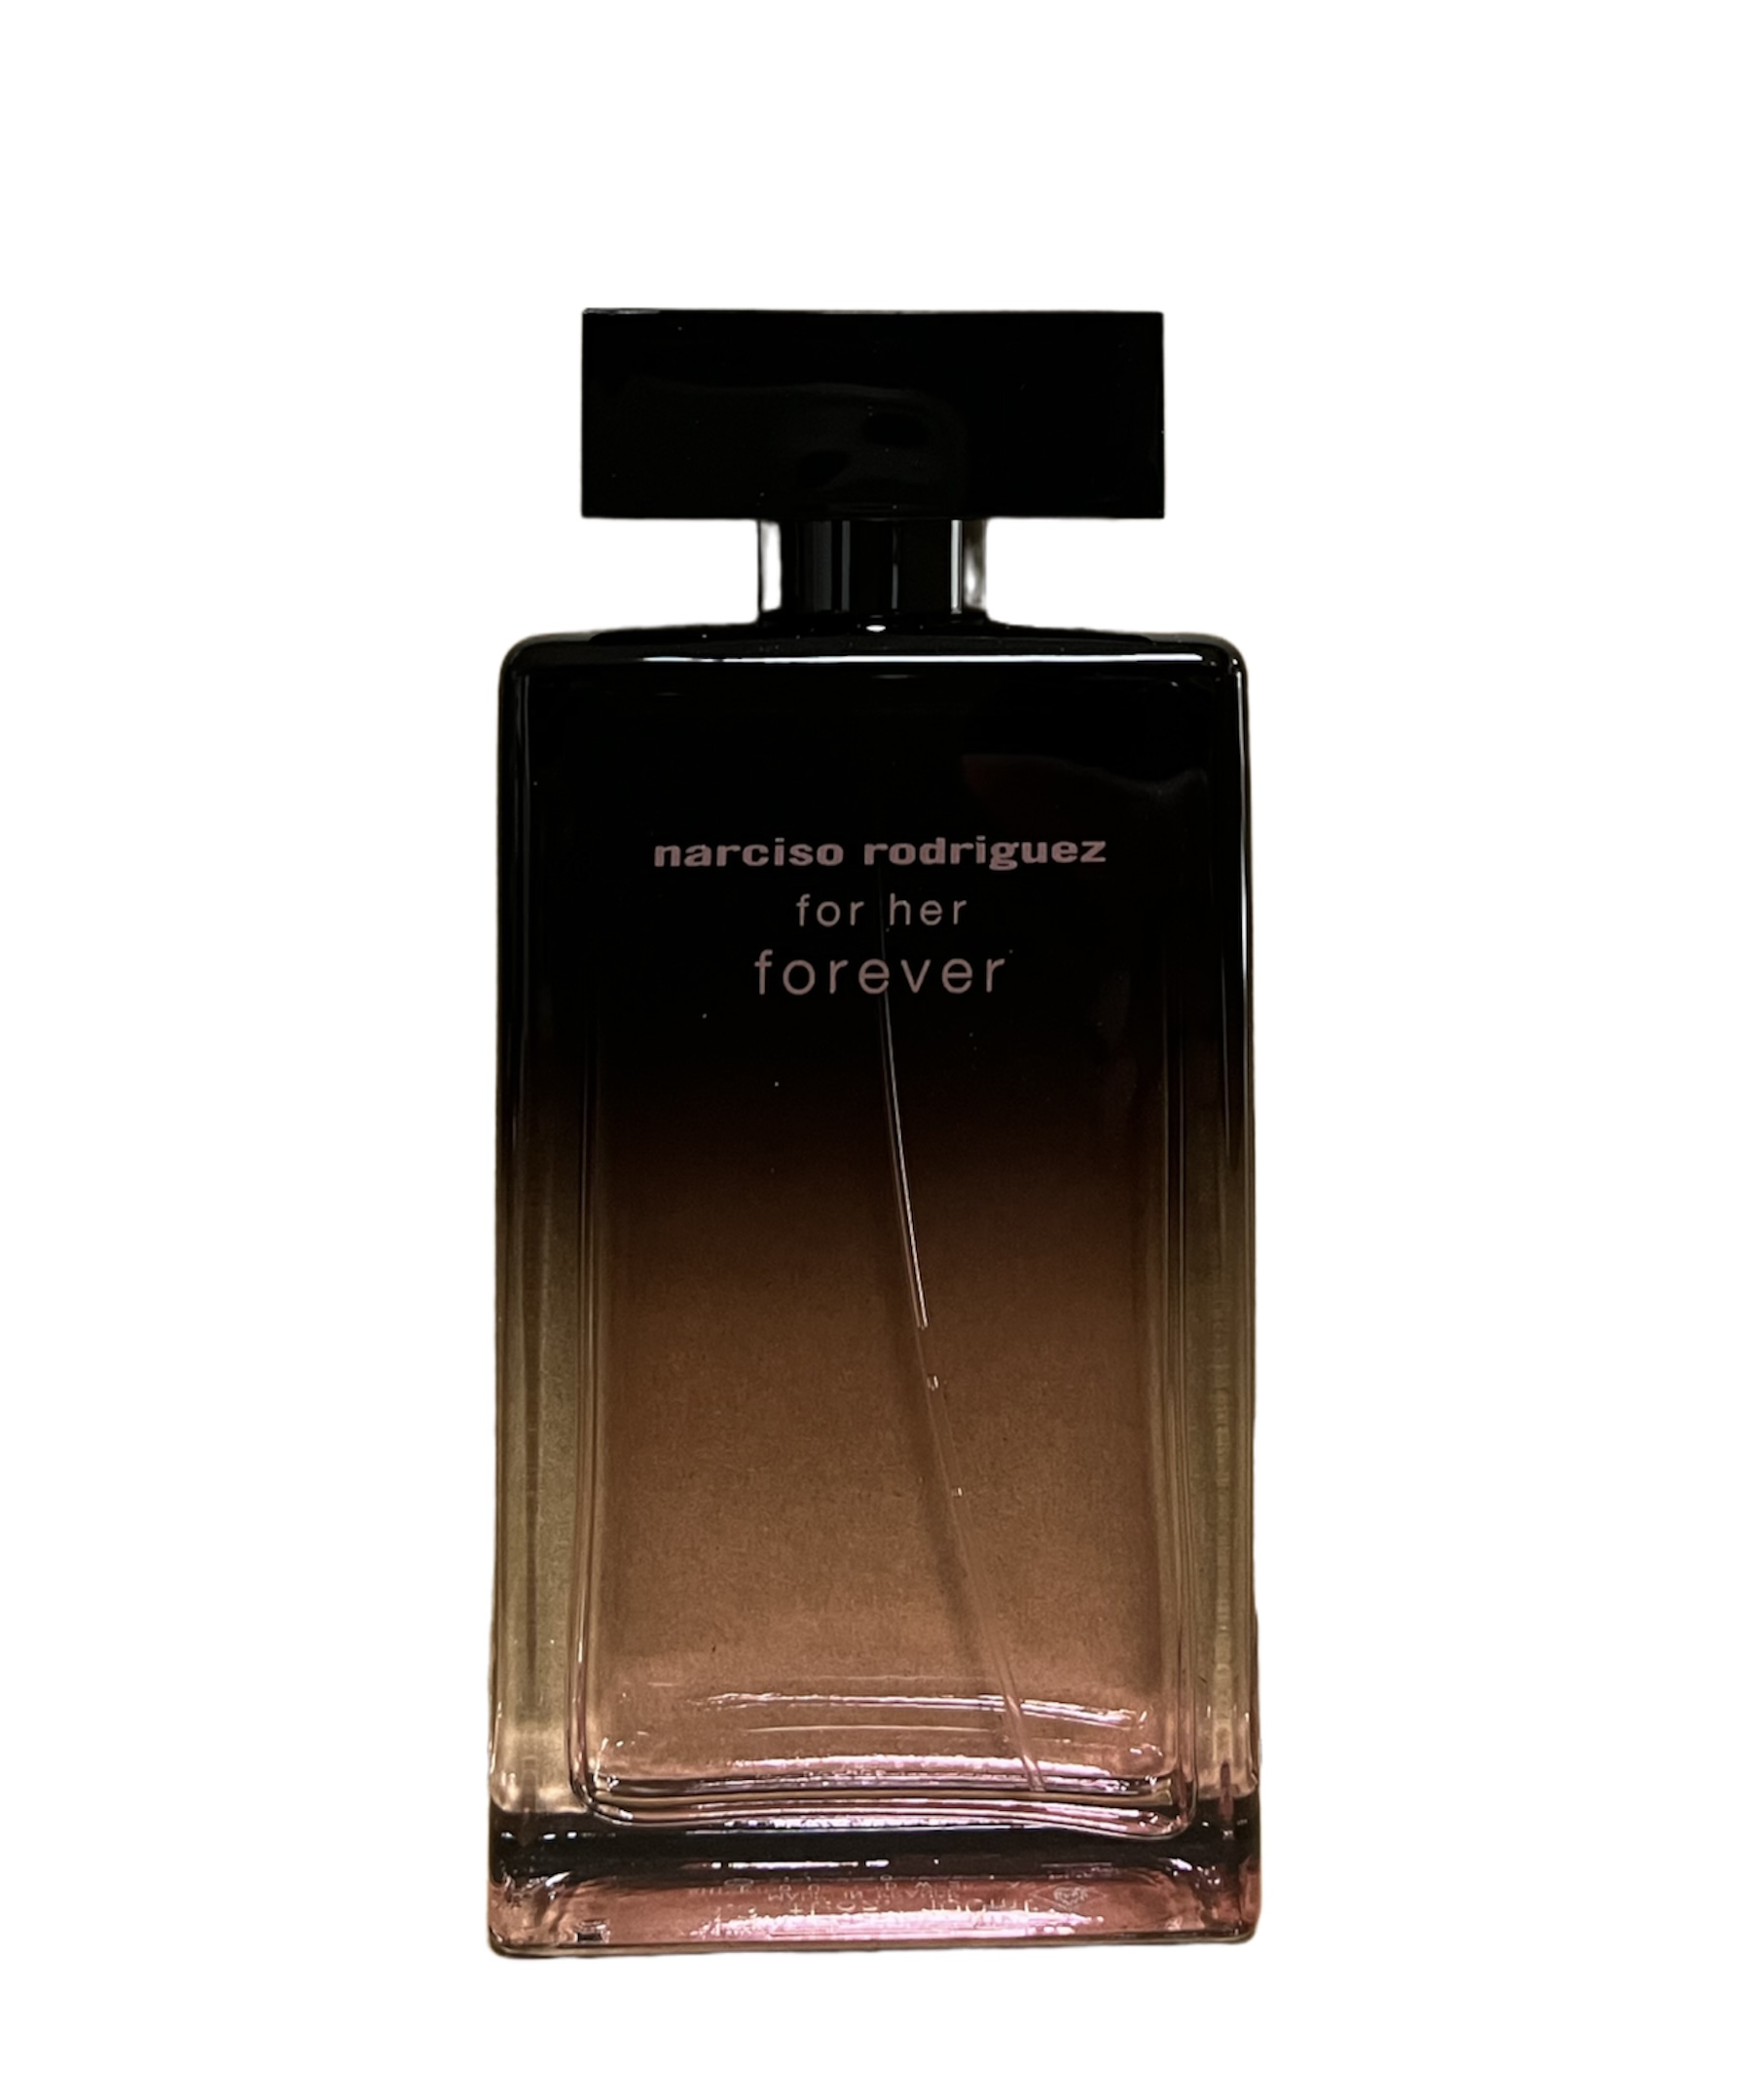  Narciso Rodriguez for her forever Eau de Parfum